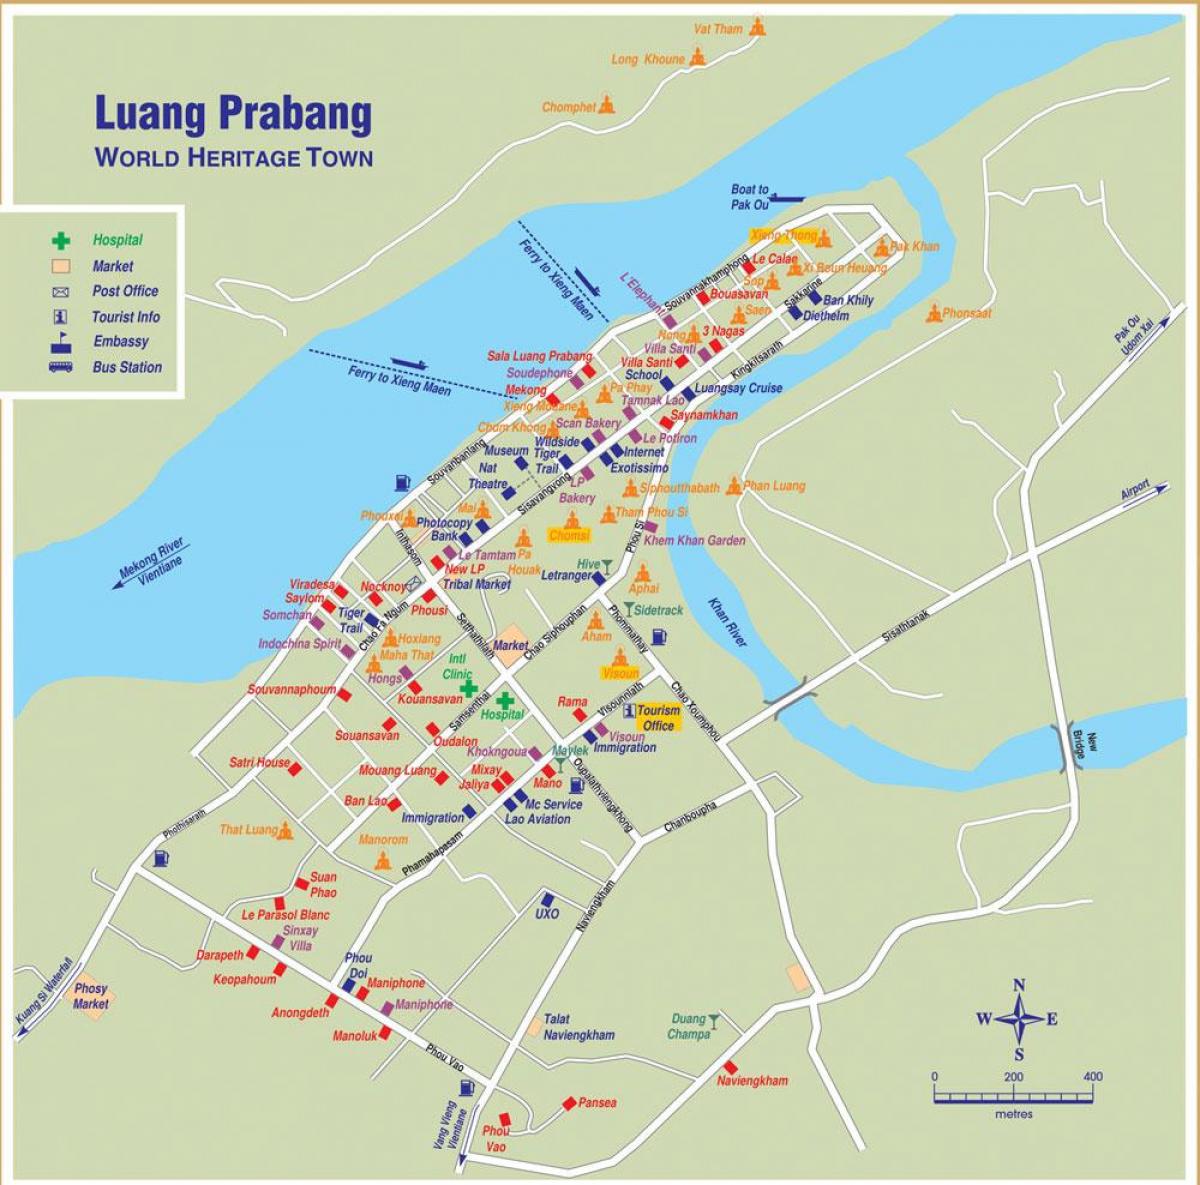 Harta e luang prabang laos 